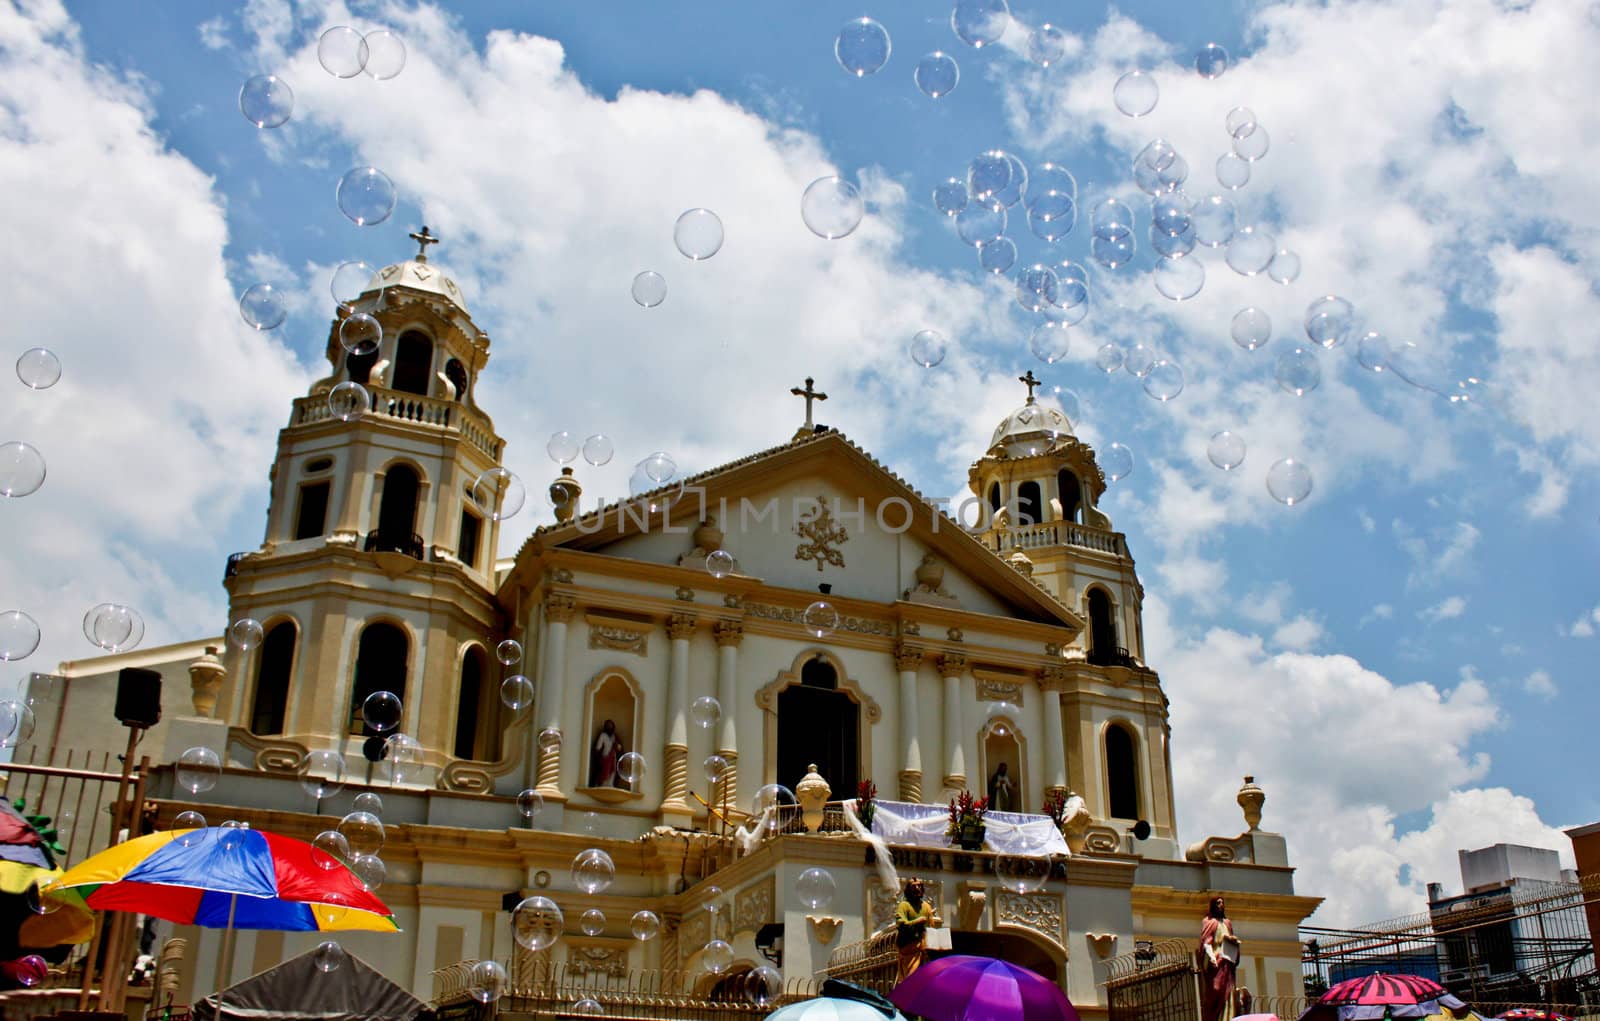 Plenty of bubbles flying across the Quiapo catholic church building in Manila.